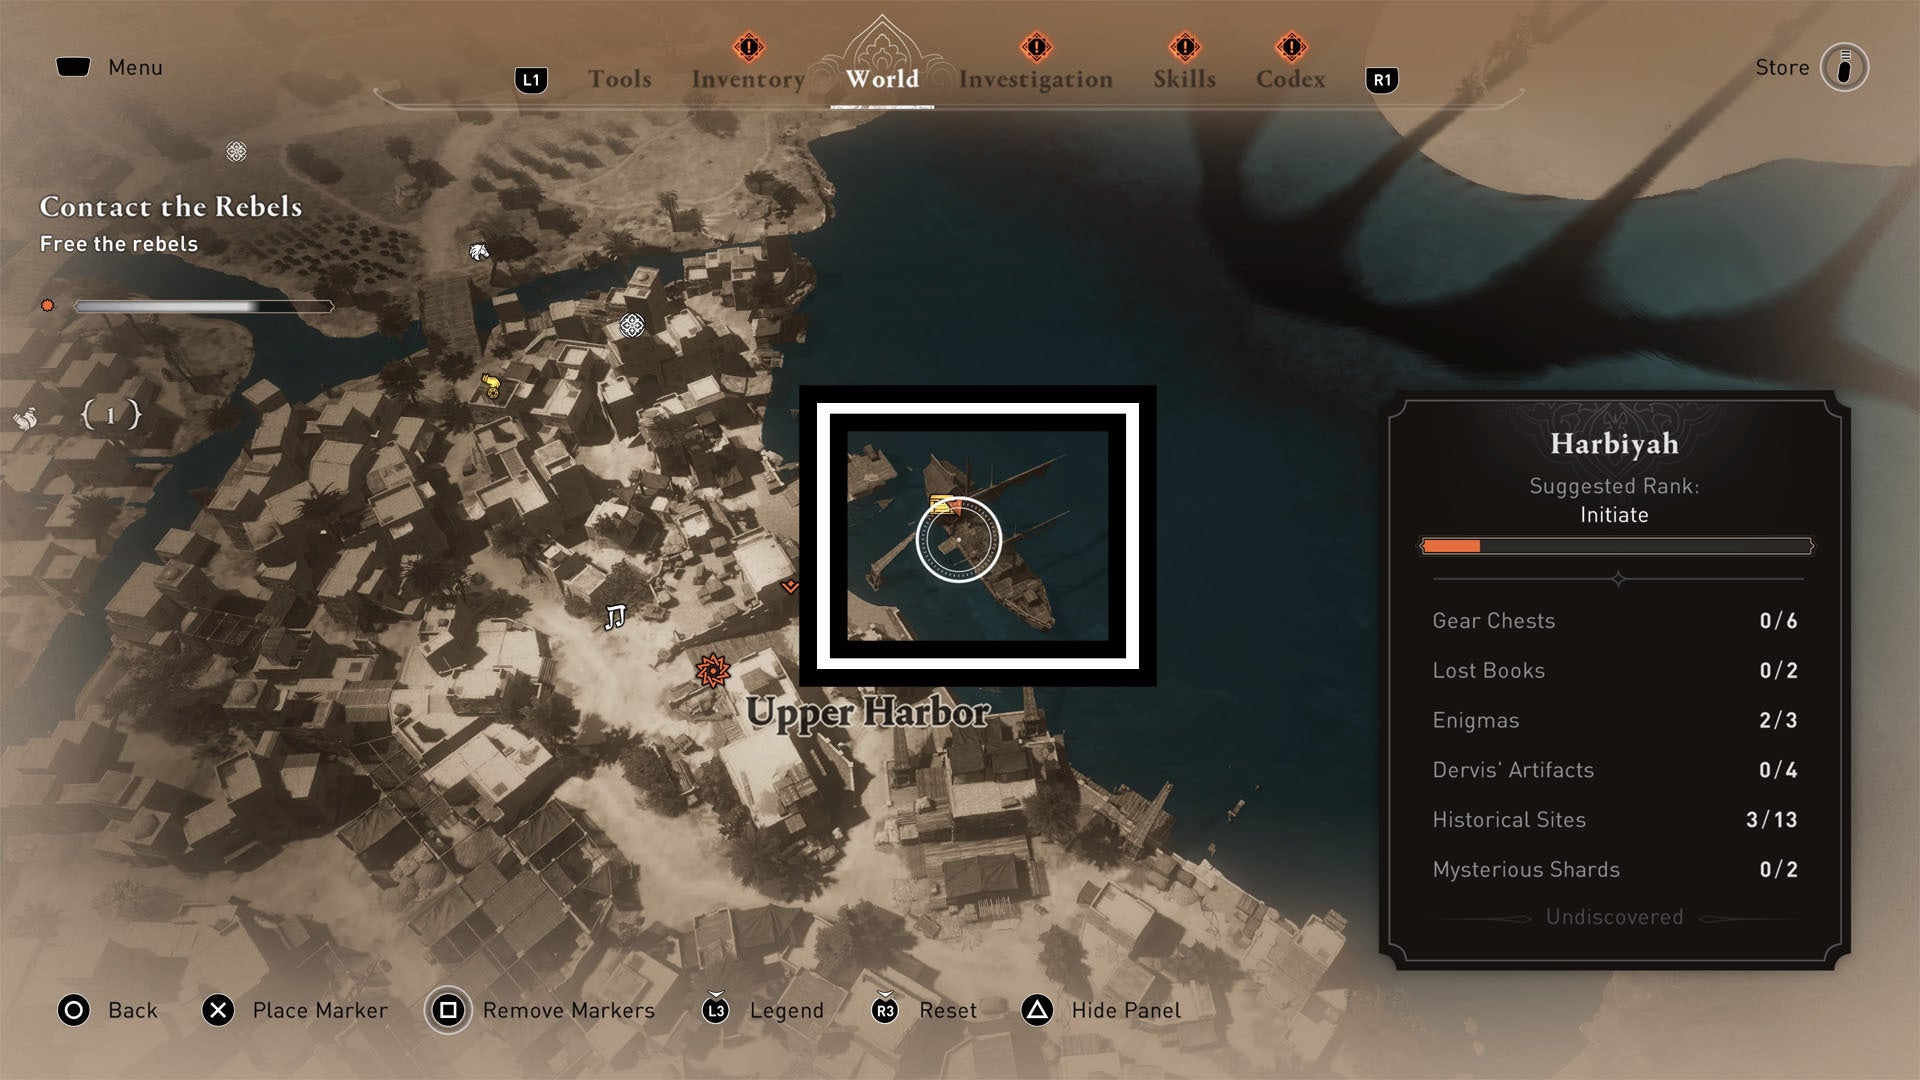 Assassins Creed Mirage Harbiyah mapa de primer plano del barco del puerto superior